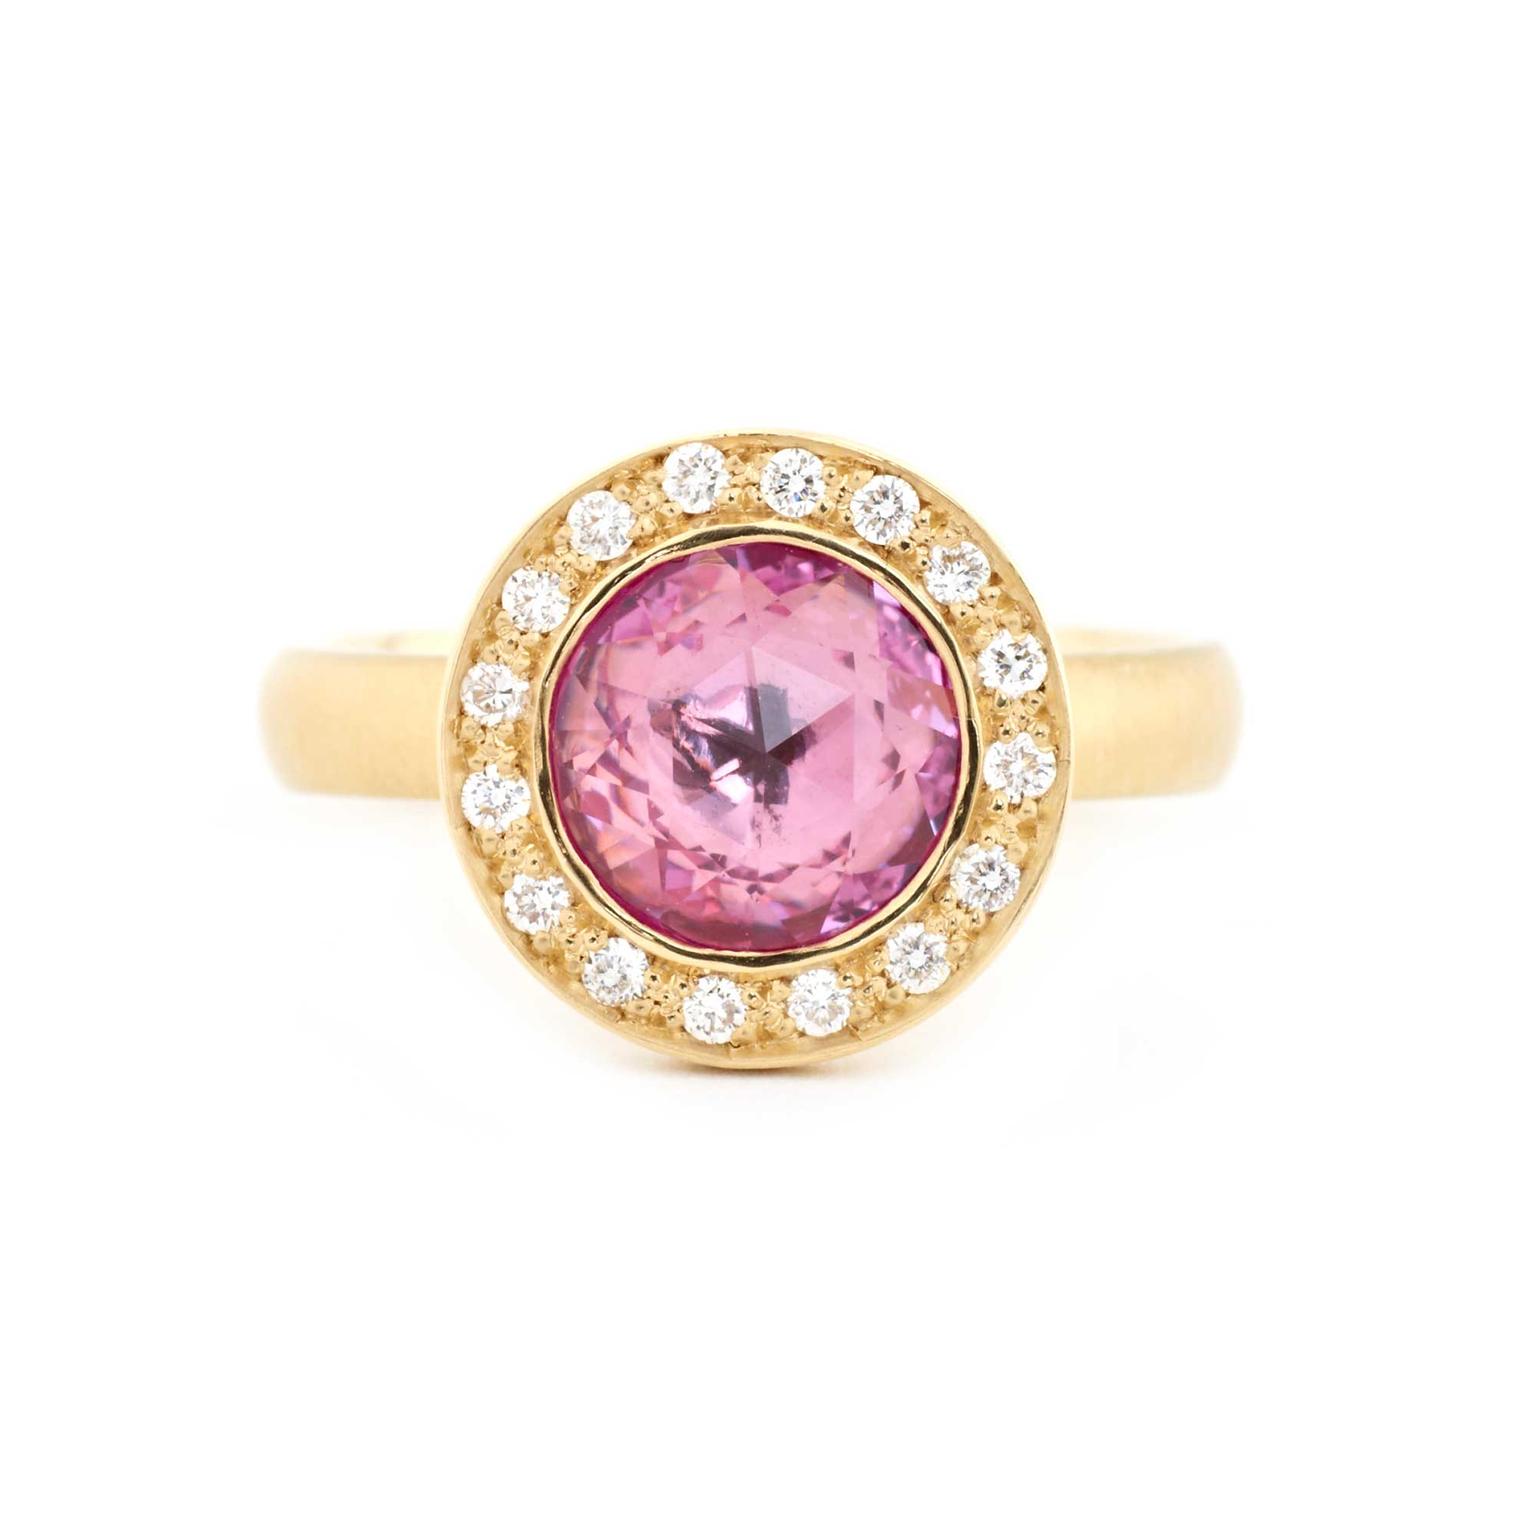 Anne Sportun pink sapphire ring